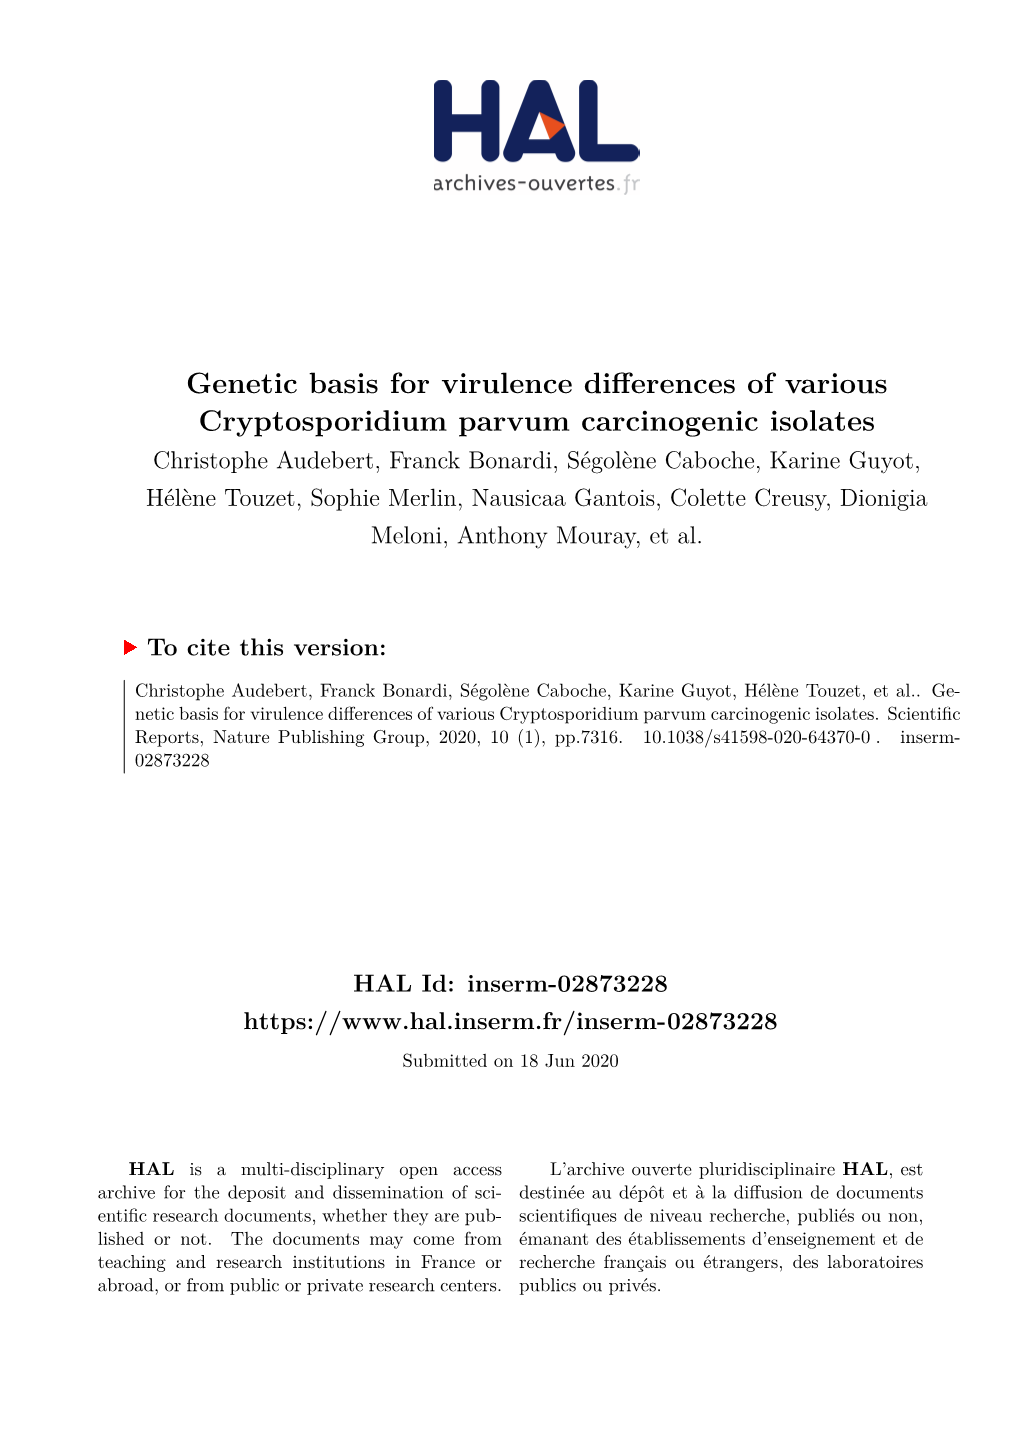 Genetic Basis for Virulence Differences of Various Cryptosporidium Parvum Carcinogenic Isolates